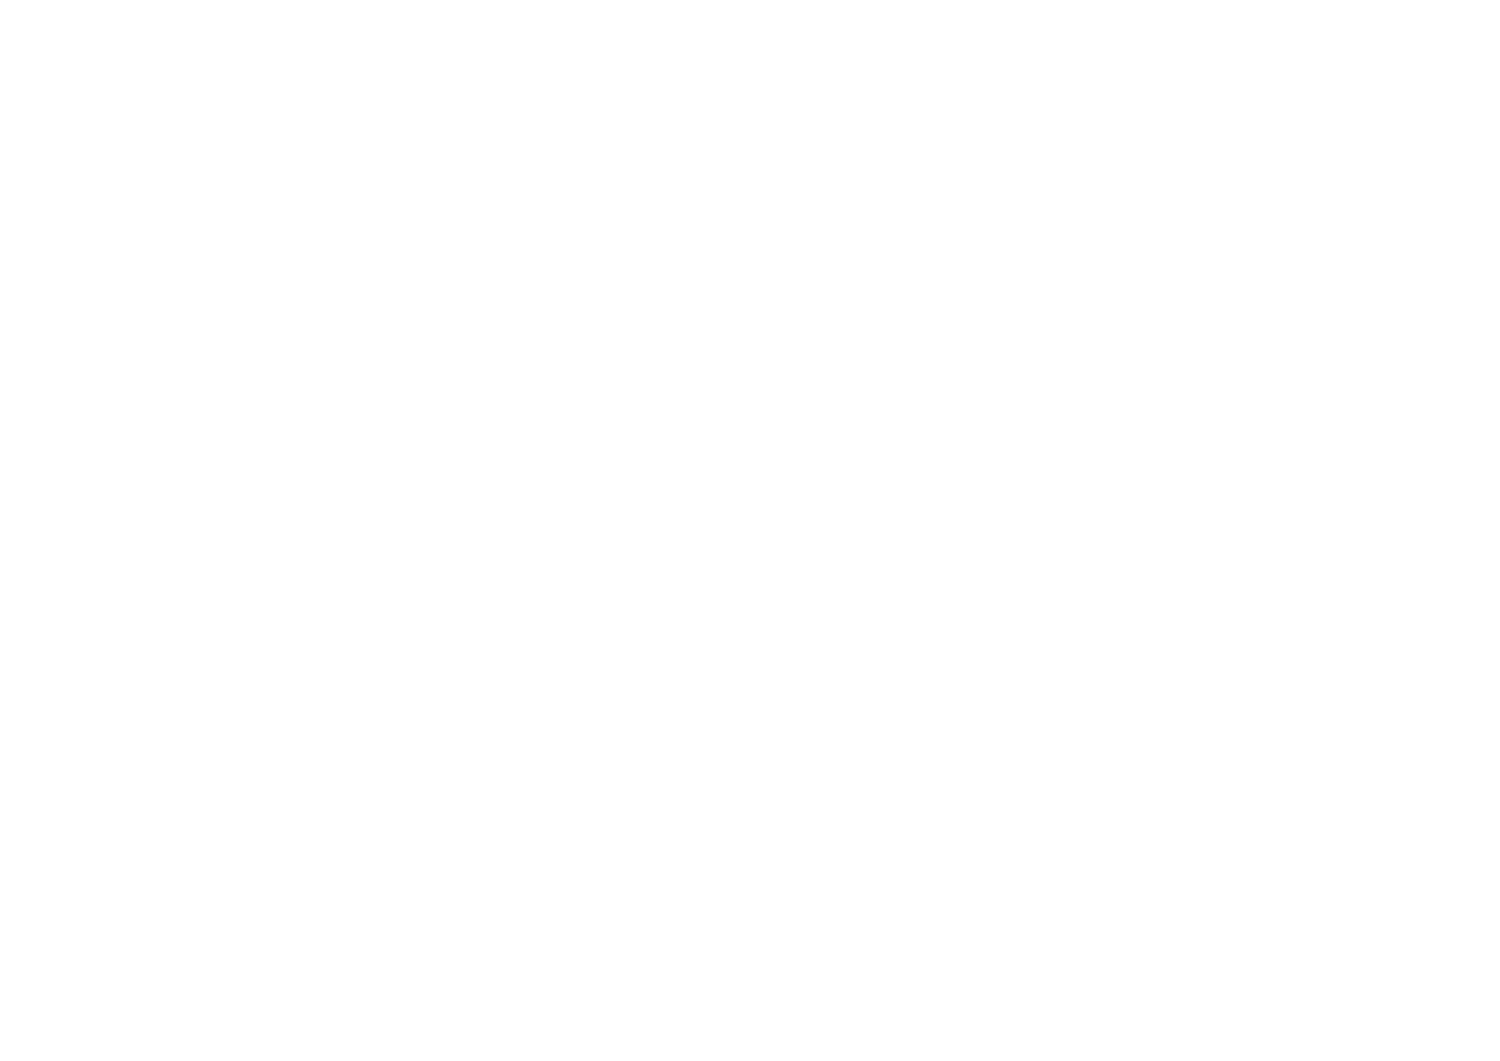 RDAugust Photography